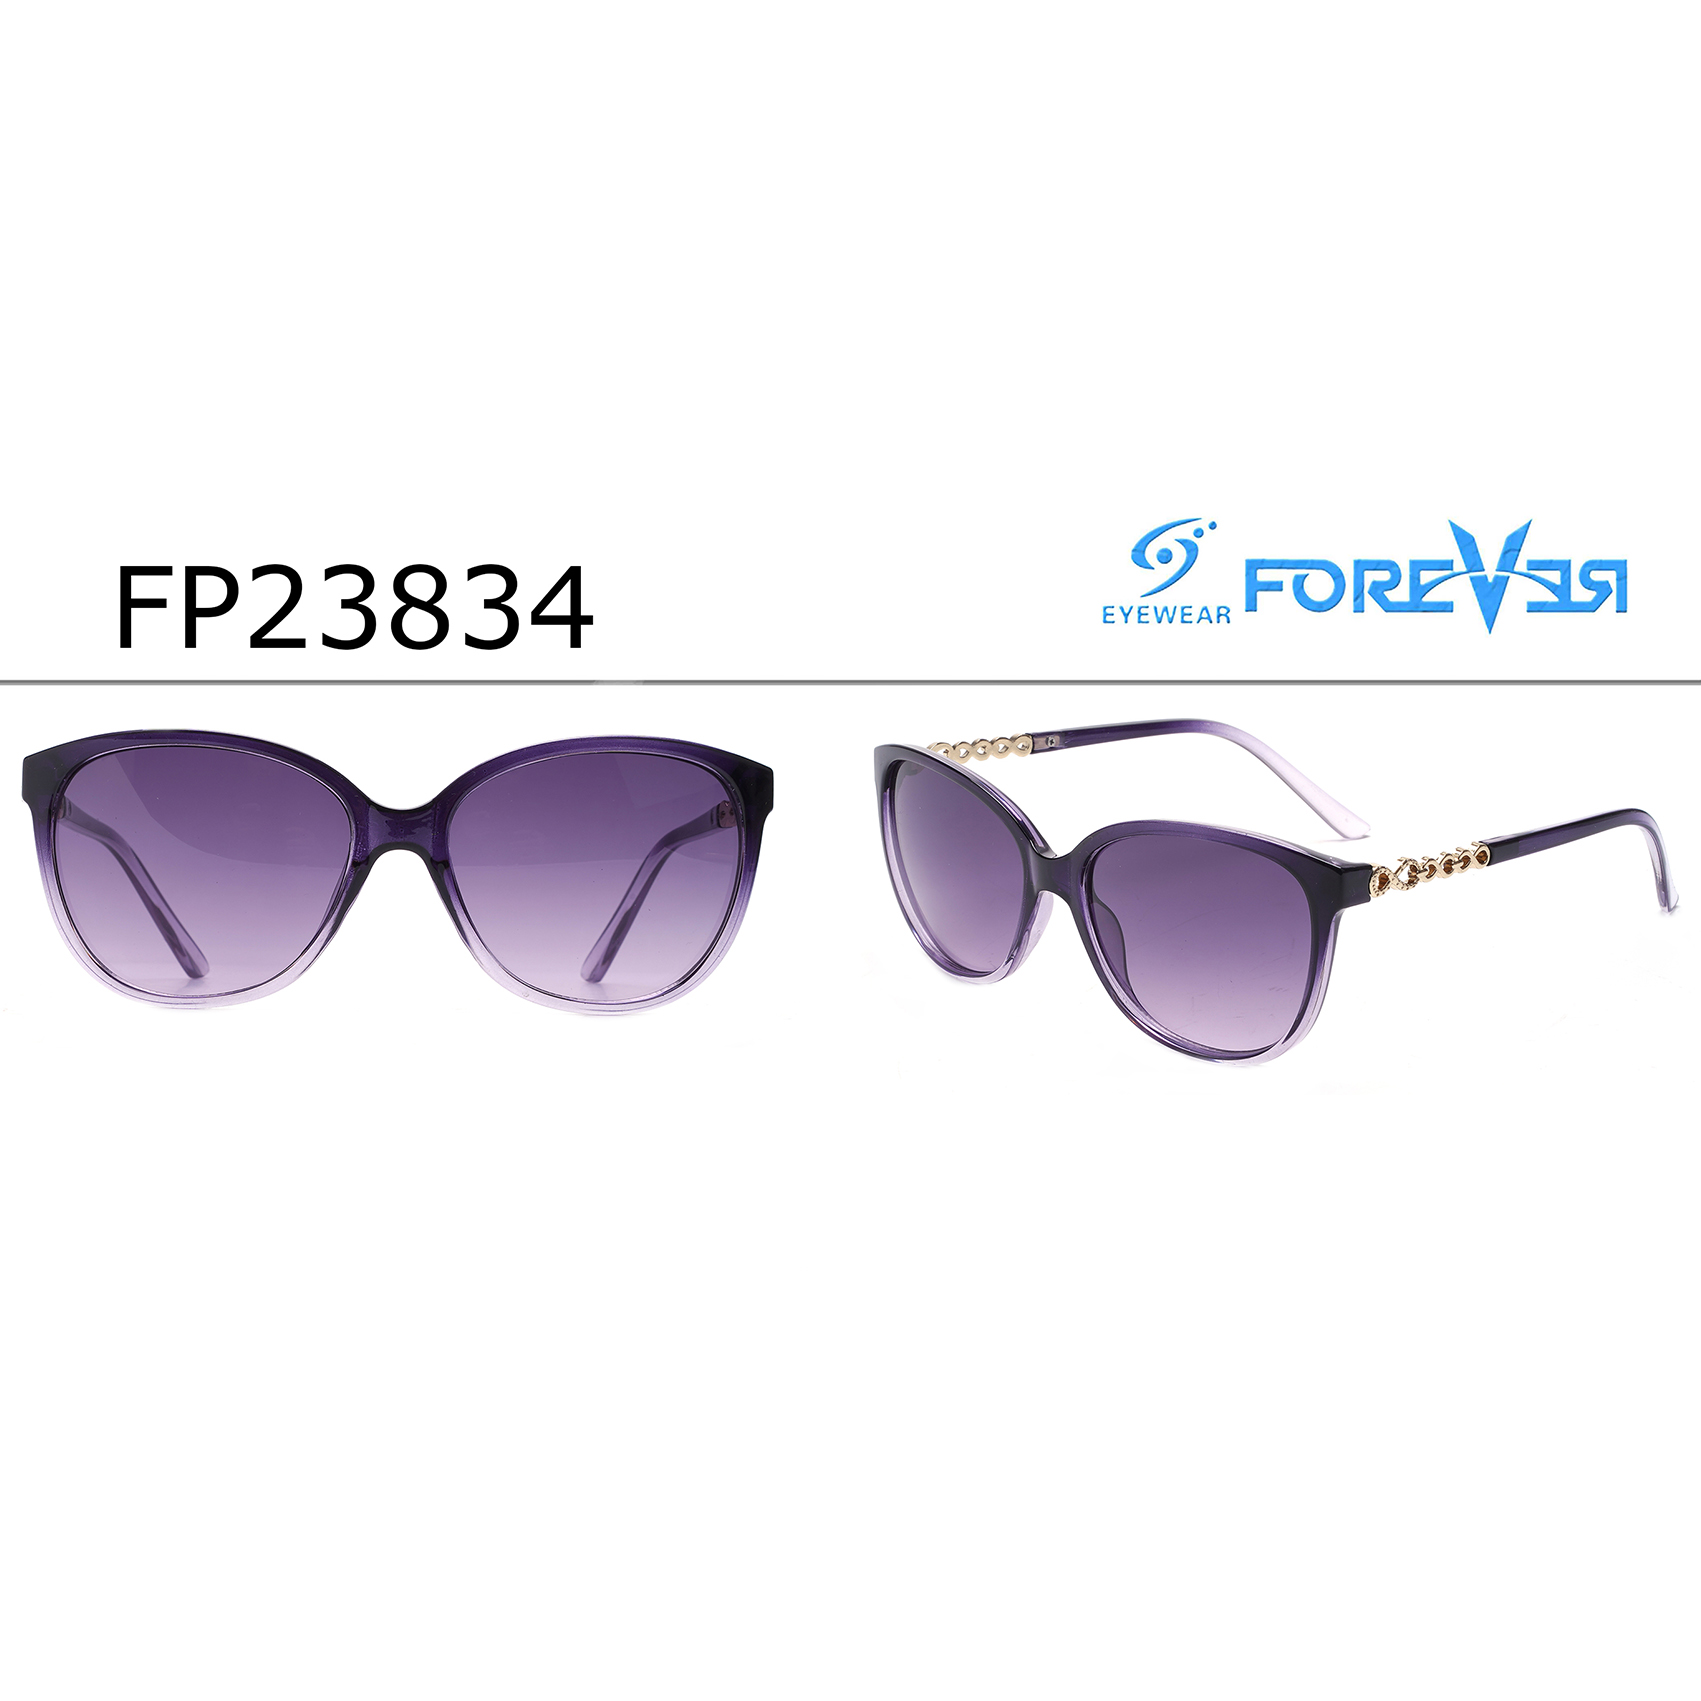 Retro-inspired Purple Mirrored Round Sunglasses Recycled Sunglasses Wholesale